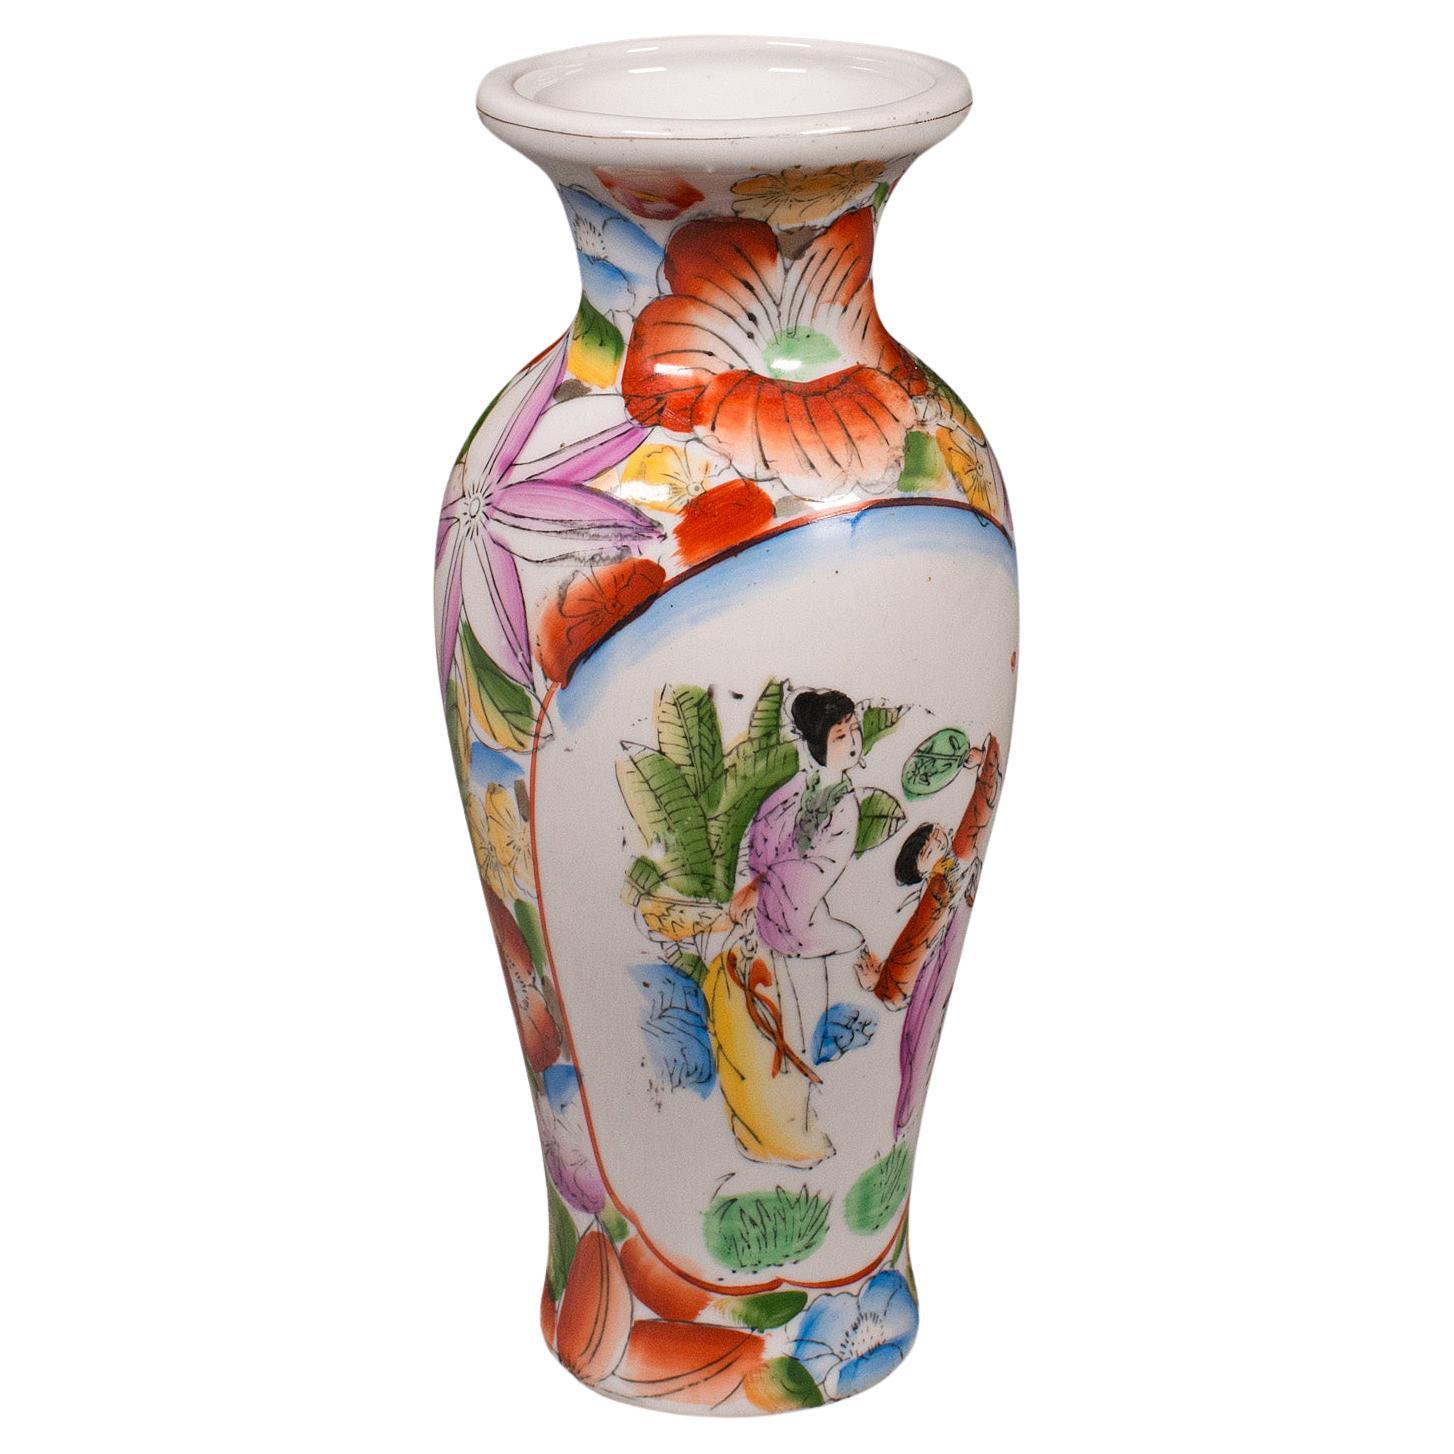 Small Vintage Decorative Posy Vase, Japanese, Hand Painted, Flower Pot, Art Deco